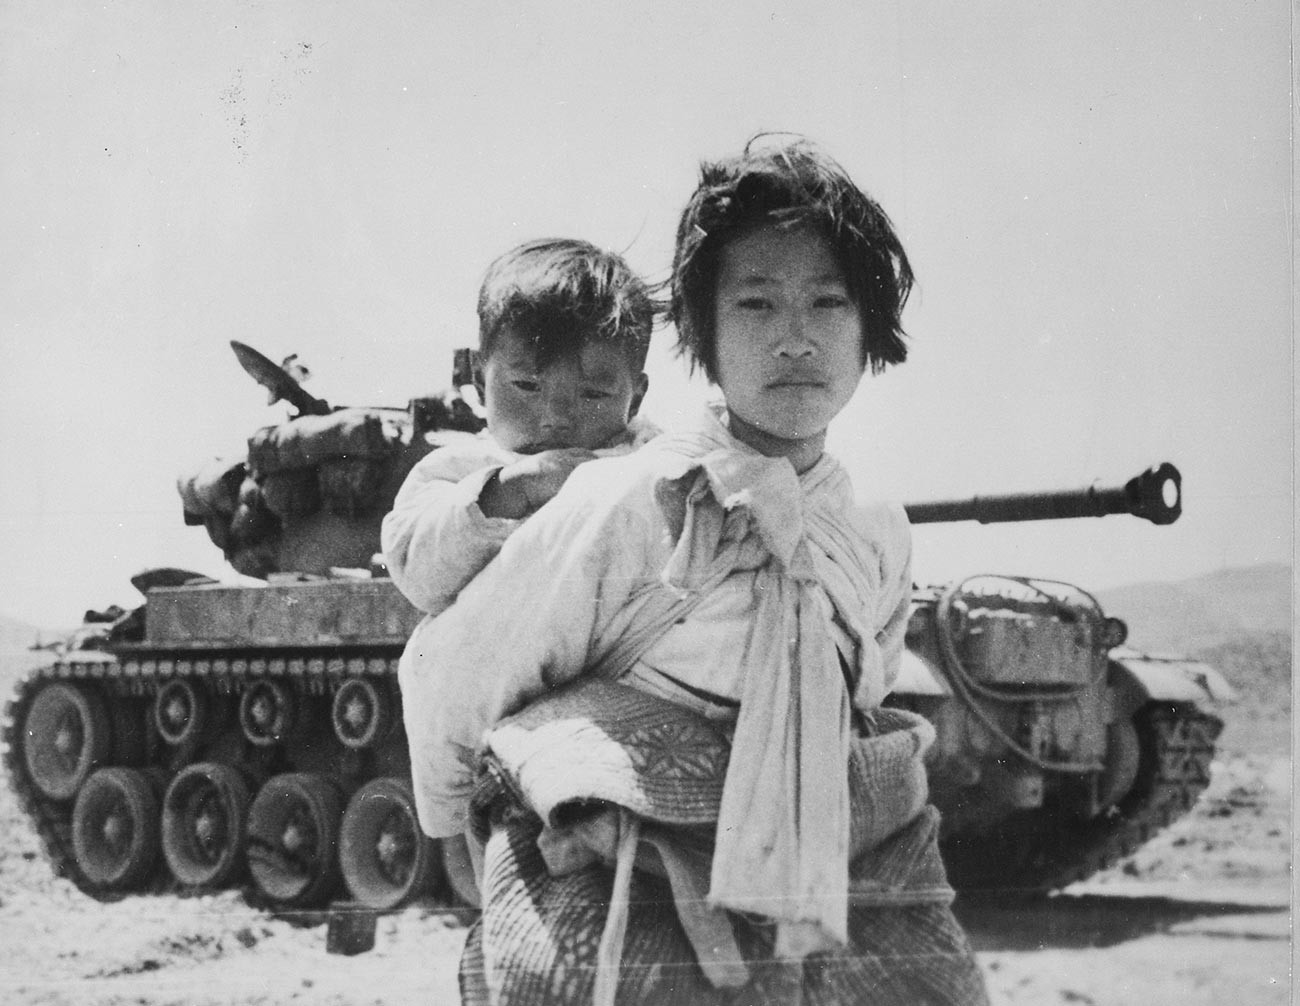 Perang Korea